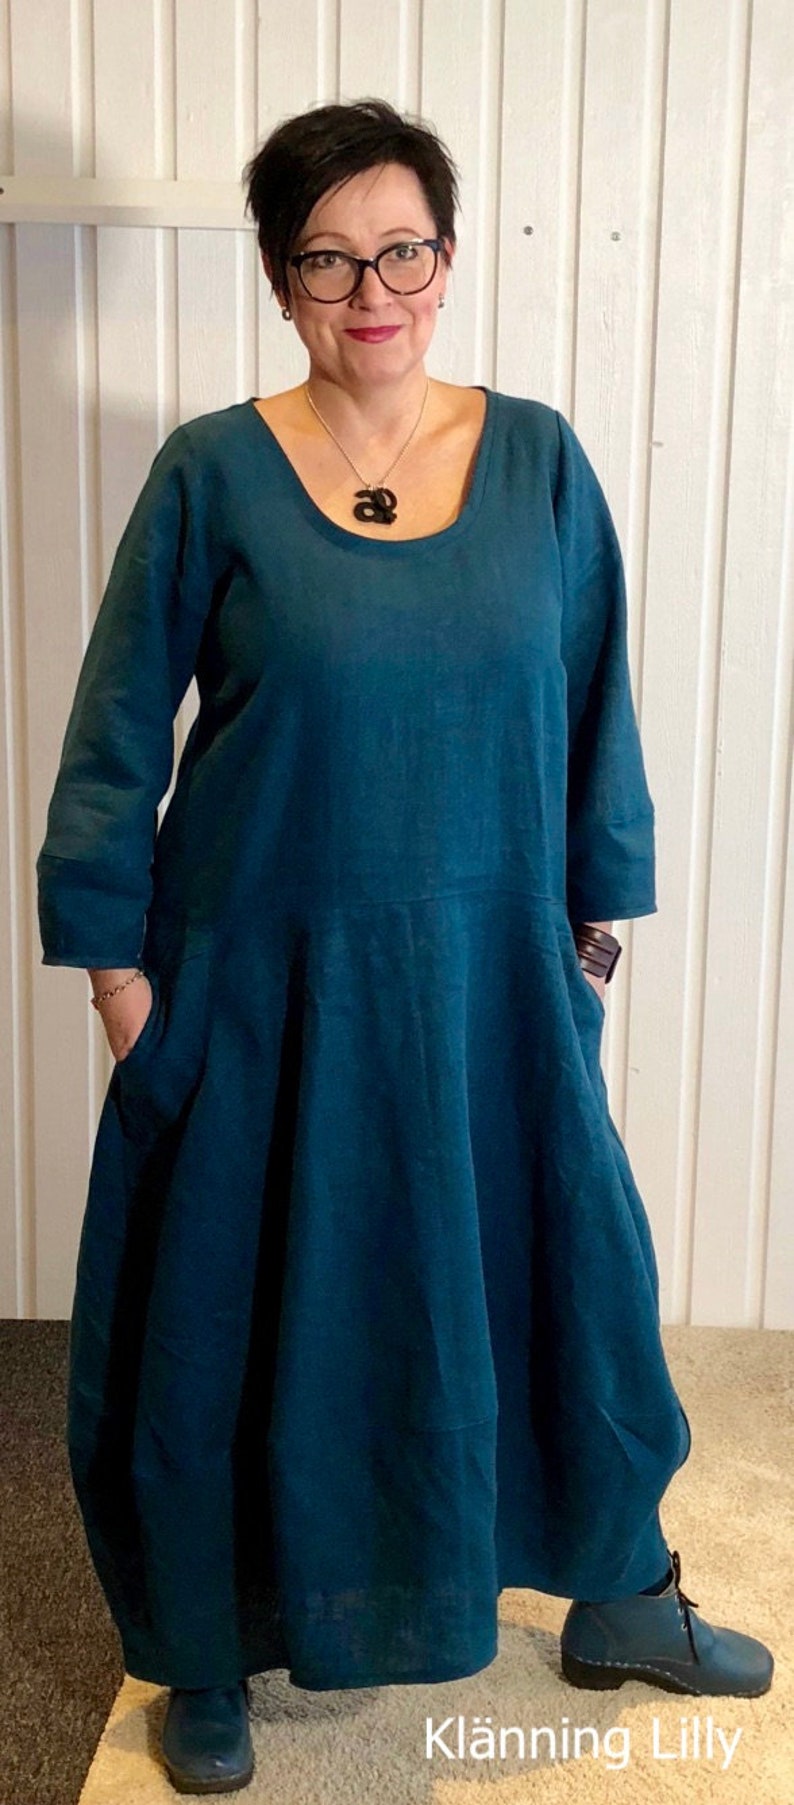 Lilly Blus tunika & känning Paper Pattern Ladieswear image 1